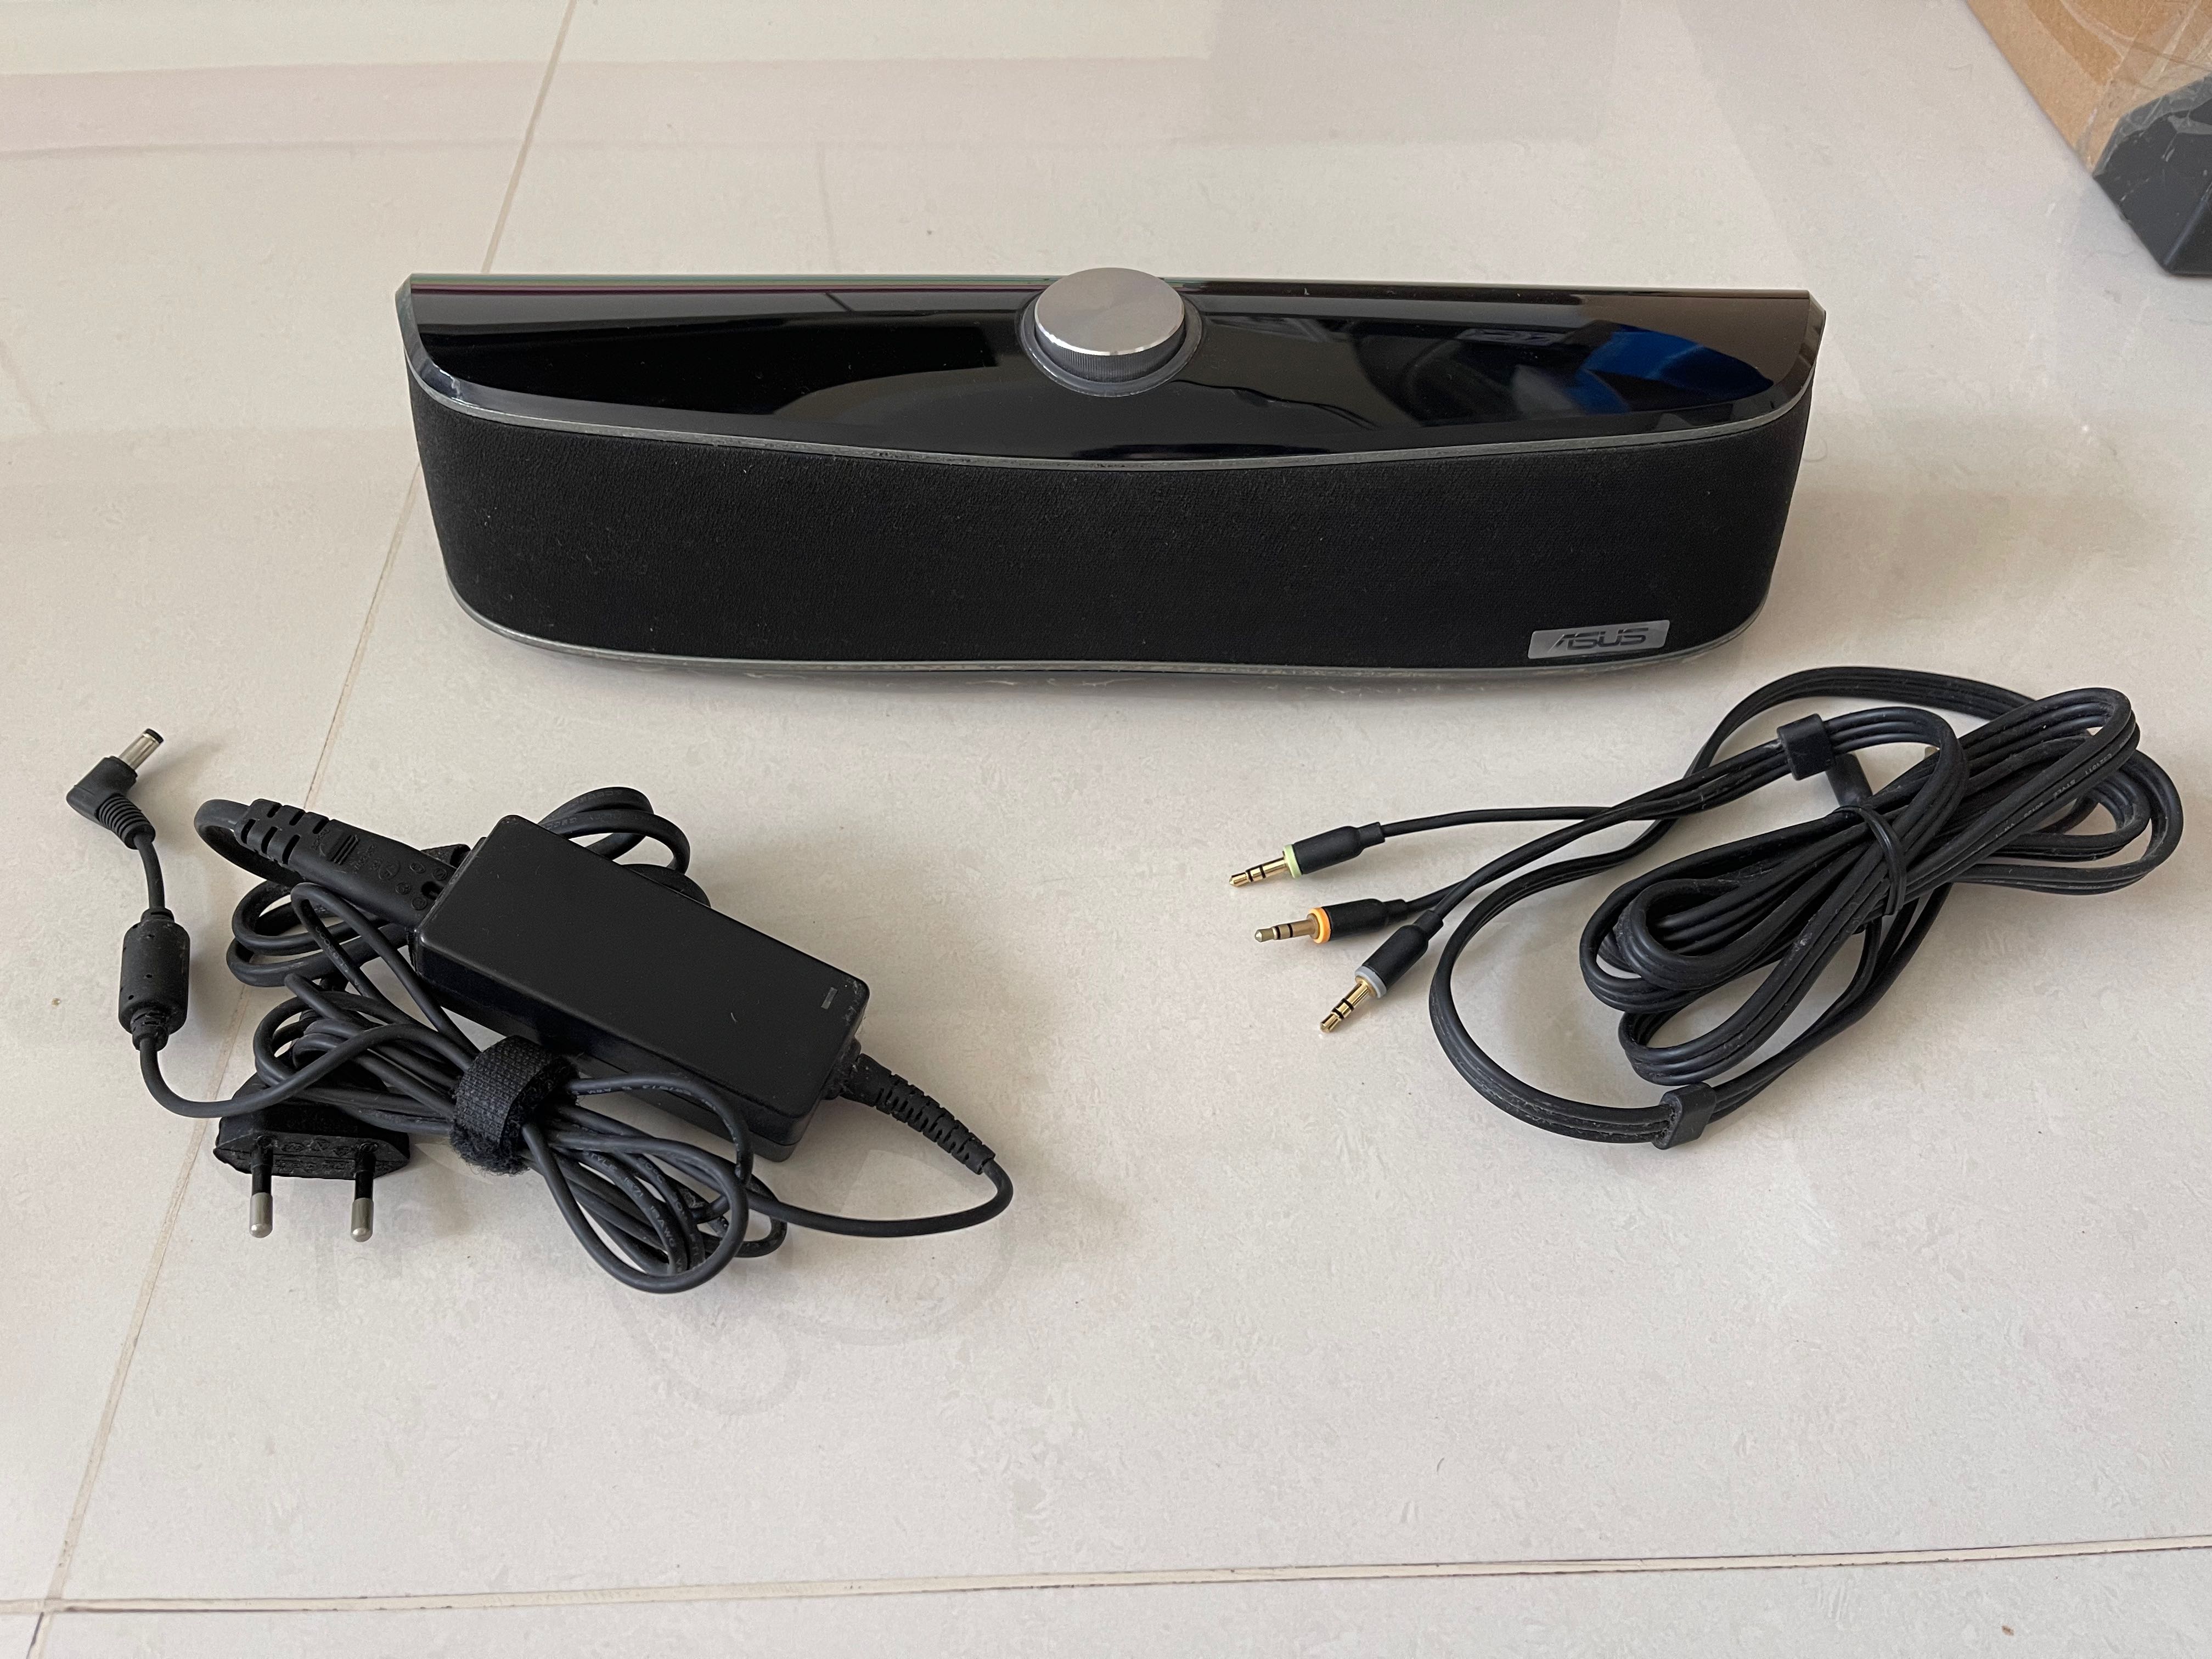 Asus cine5 5.1 surround soundbar, Audio, Soundbars, Speakers & Amplifiers Carousell